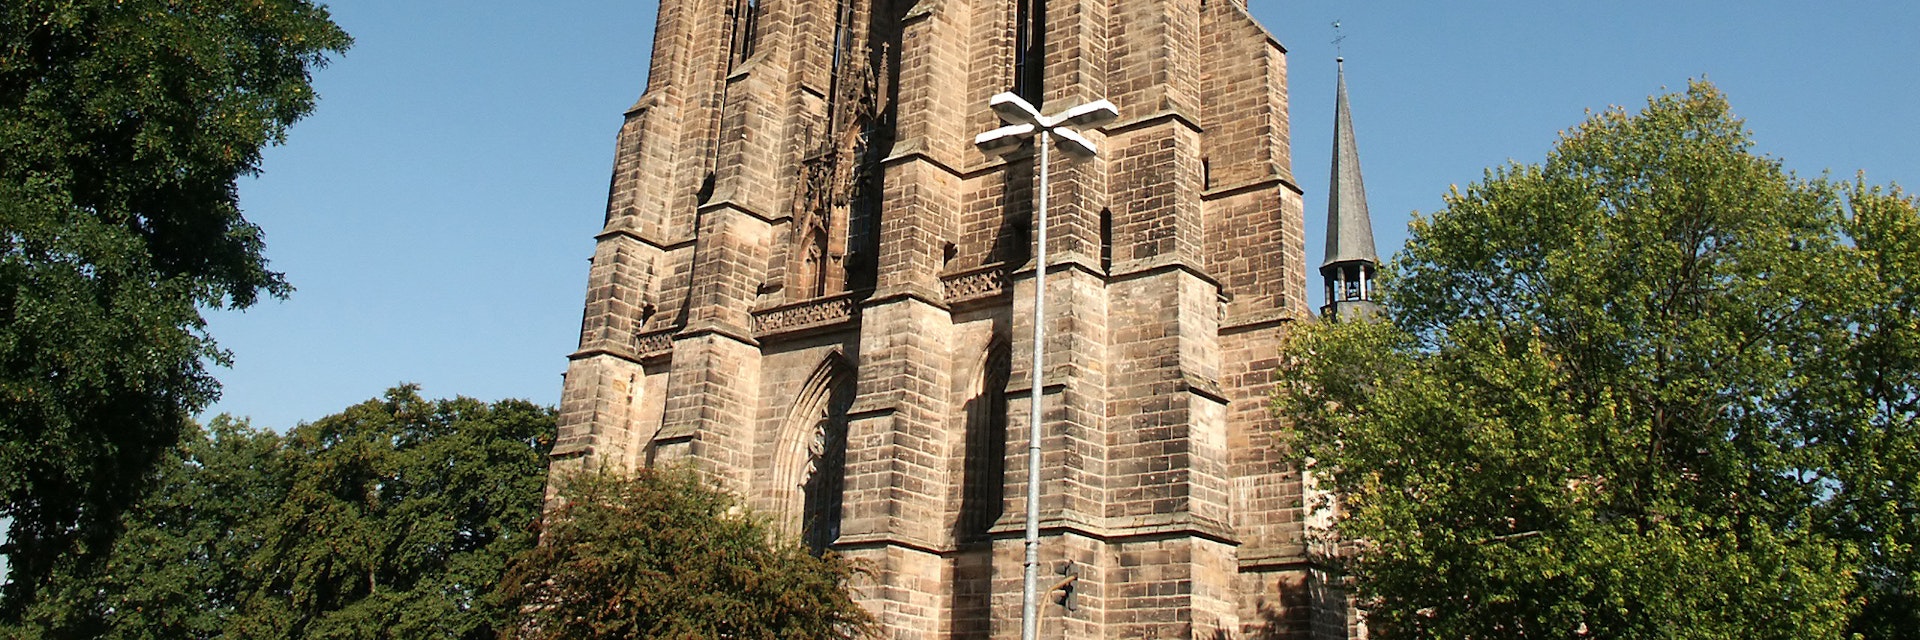 Church Elisabethkirche in Marburg, Germany.